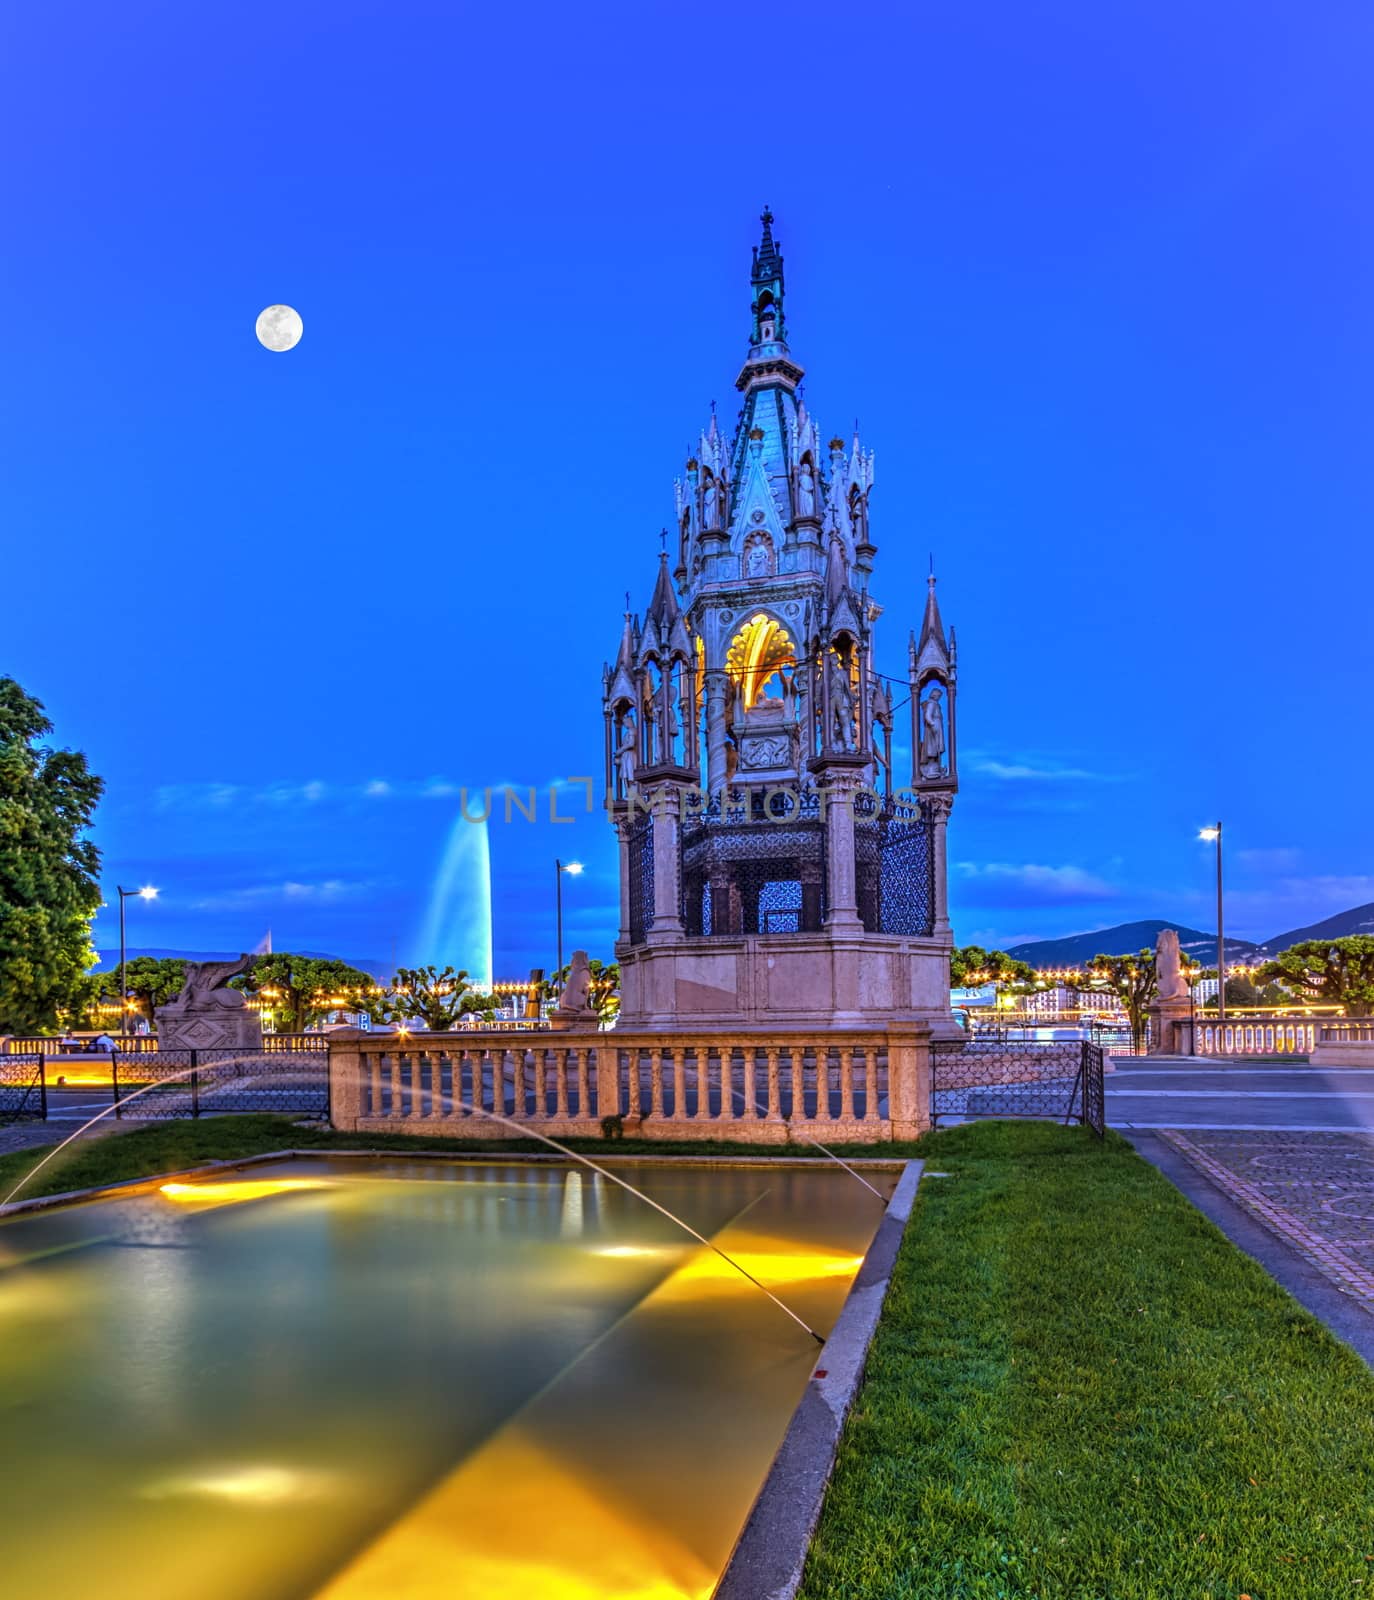 Brunswick monument and fountain by night in Geneva, Switzerland, HDR